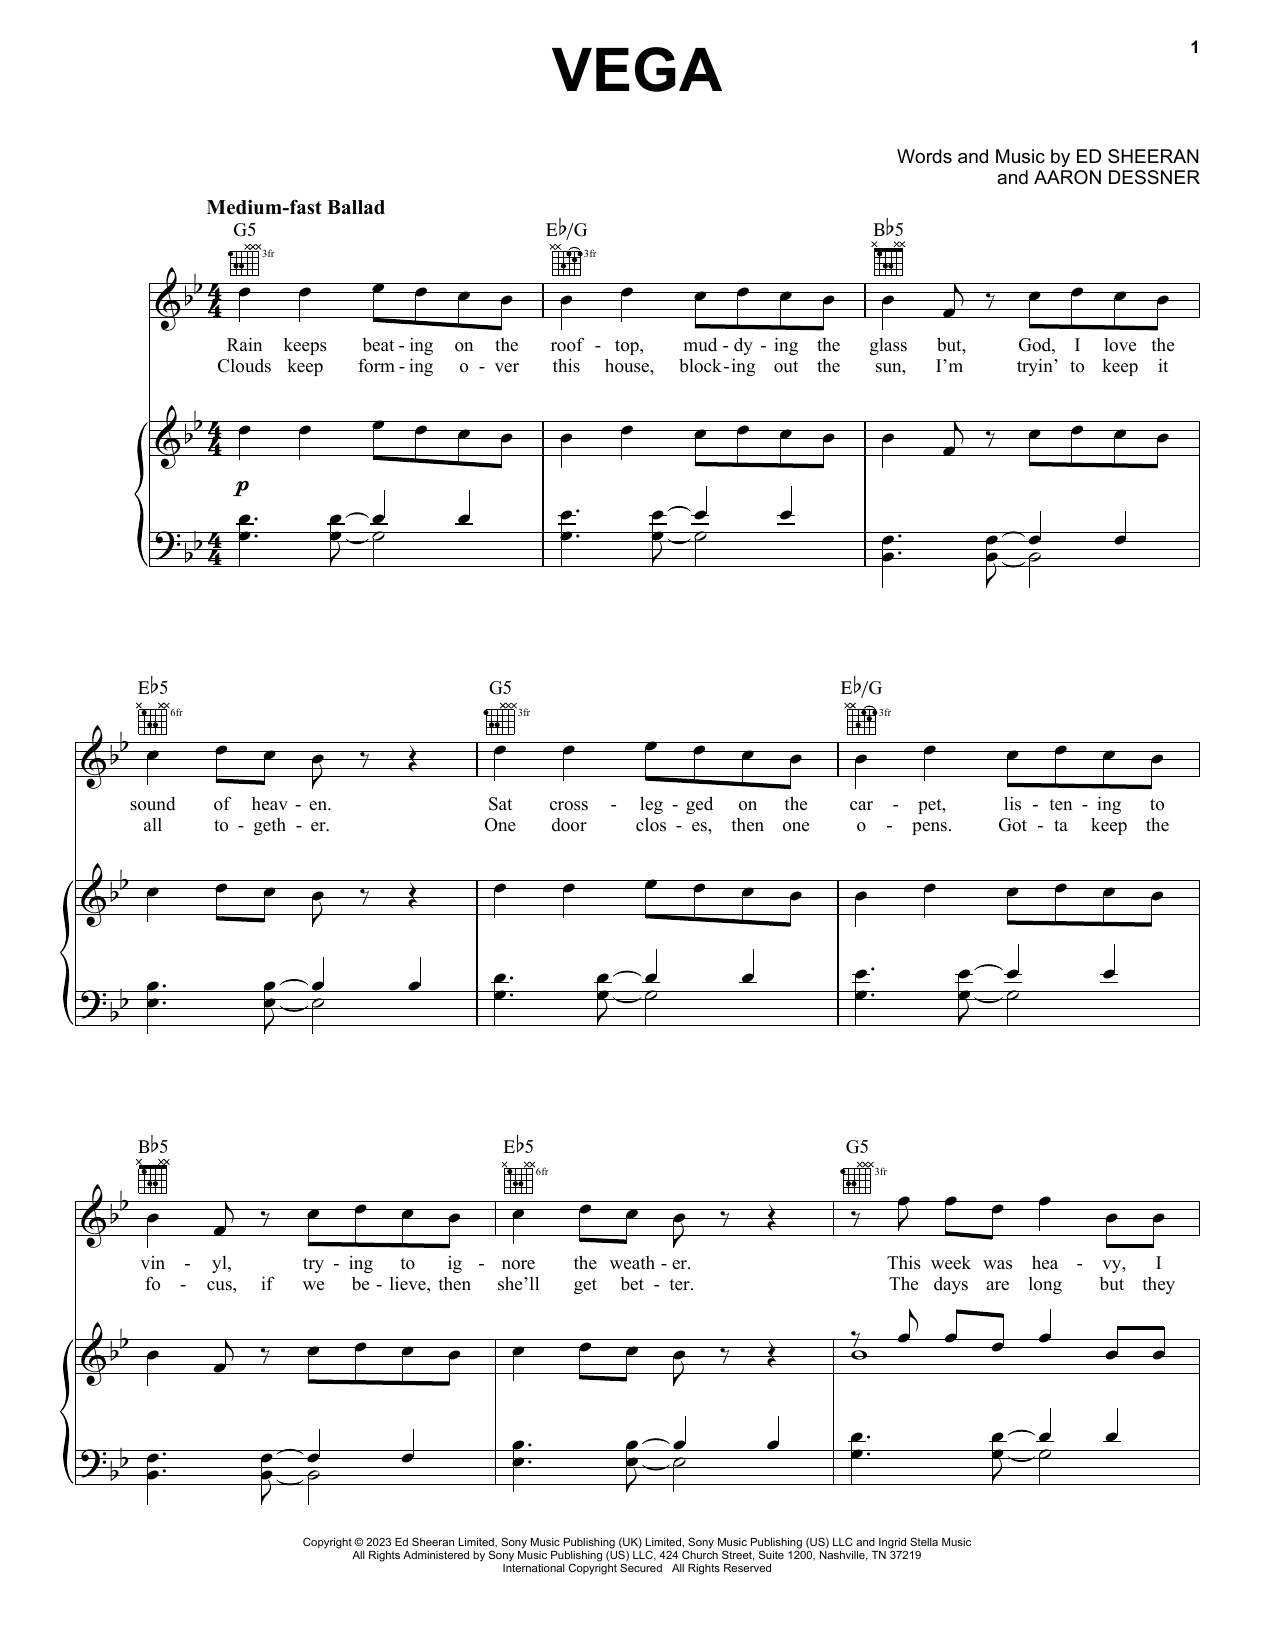 Ed Sheeran Vega Sheet Music Notes & Chords for Piano, Vocal & Guitar Chords (Right-Hand Melody) - Download or Print PDF